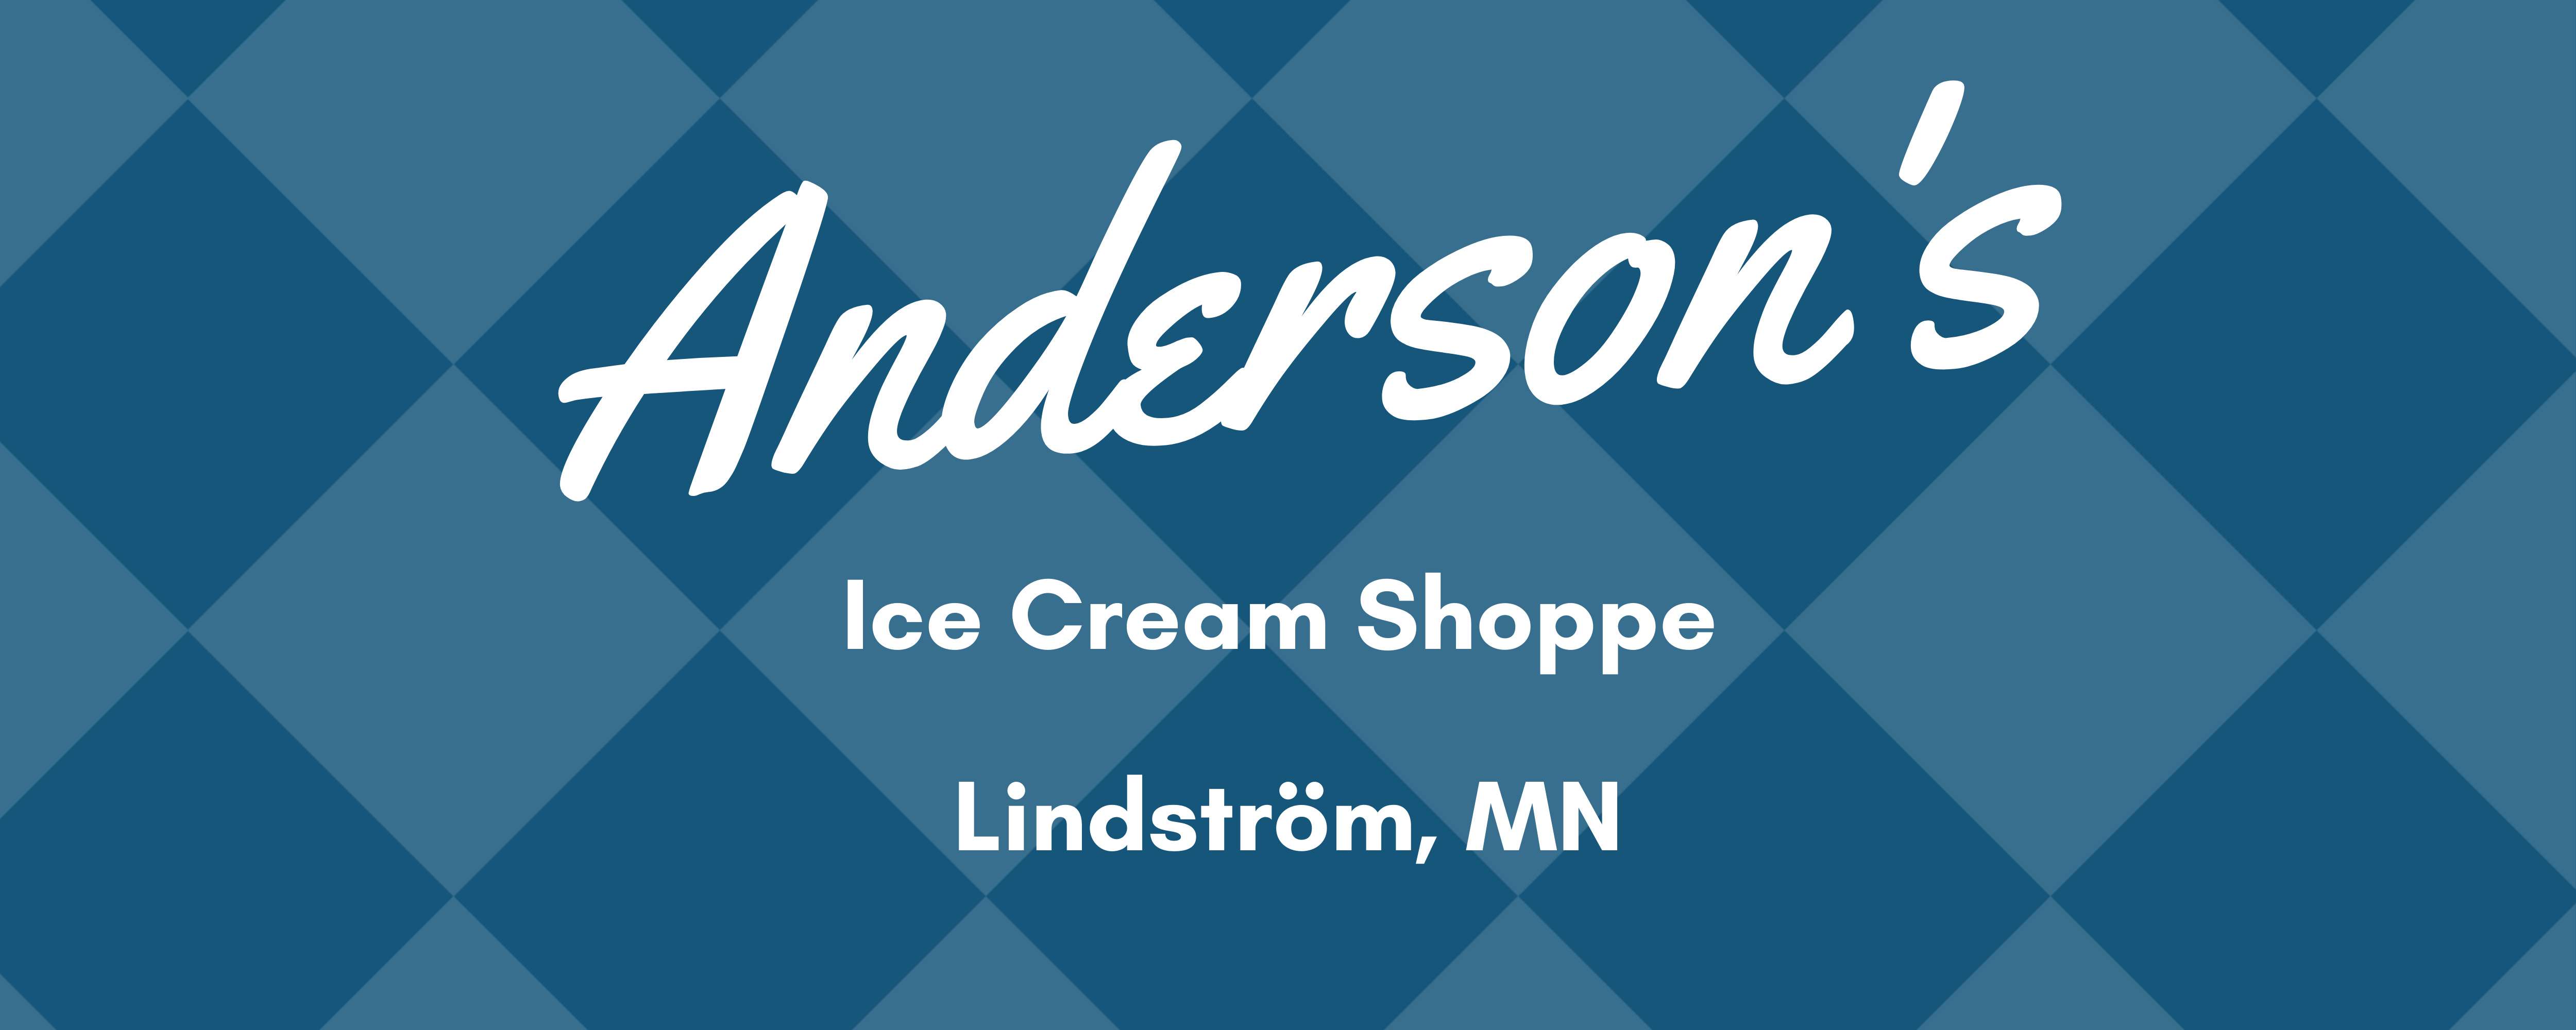 Ice Cream Anderson #39 s Ice Cream Shoppe